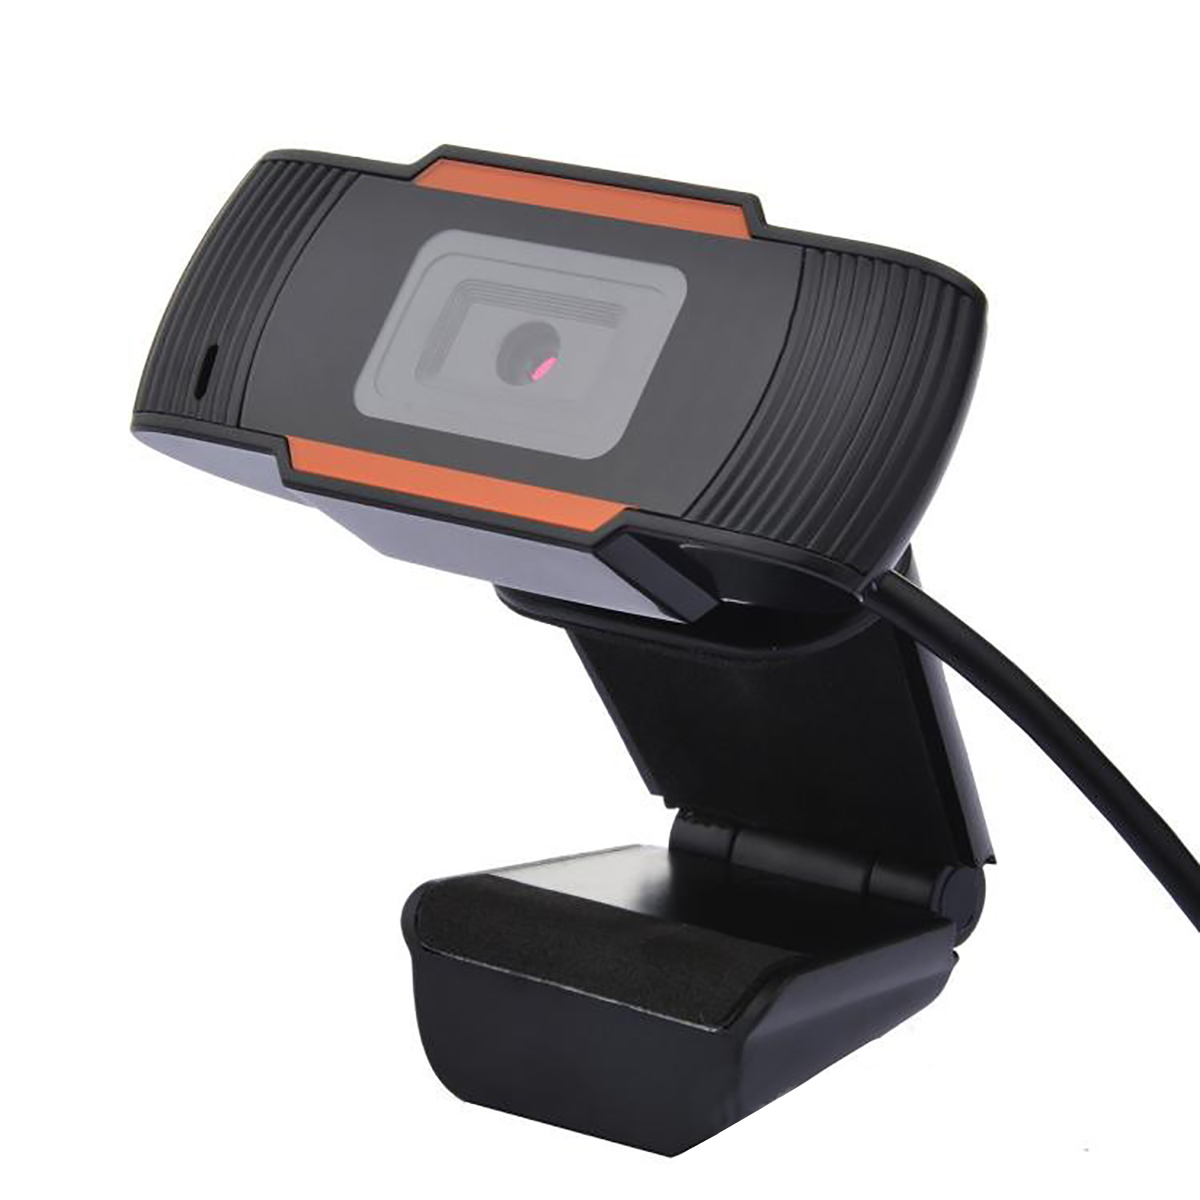 HD-Webcam-Auto-Focusing-Web-USB-20-Camera-With-Microphone-For-Laptop-Desktop-1780567-12